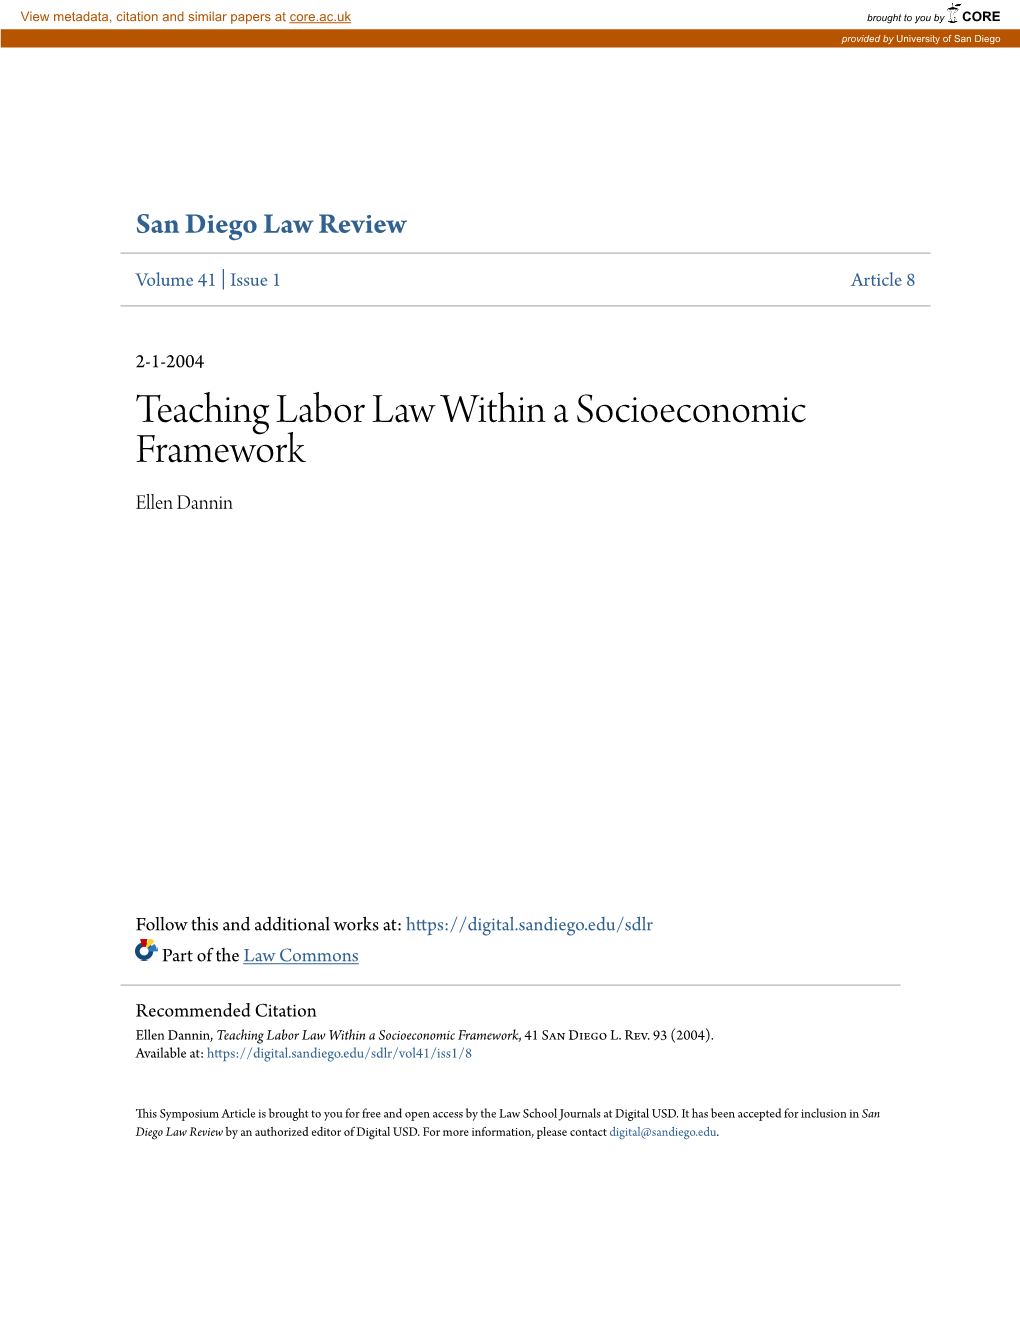 Teaching Labor Law Within a Socioeconomic Framework Ellen Dannin